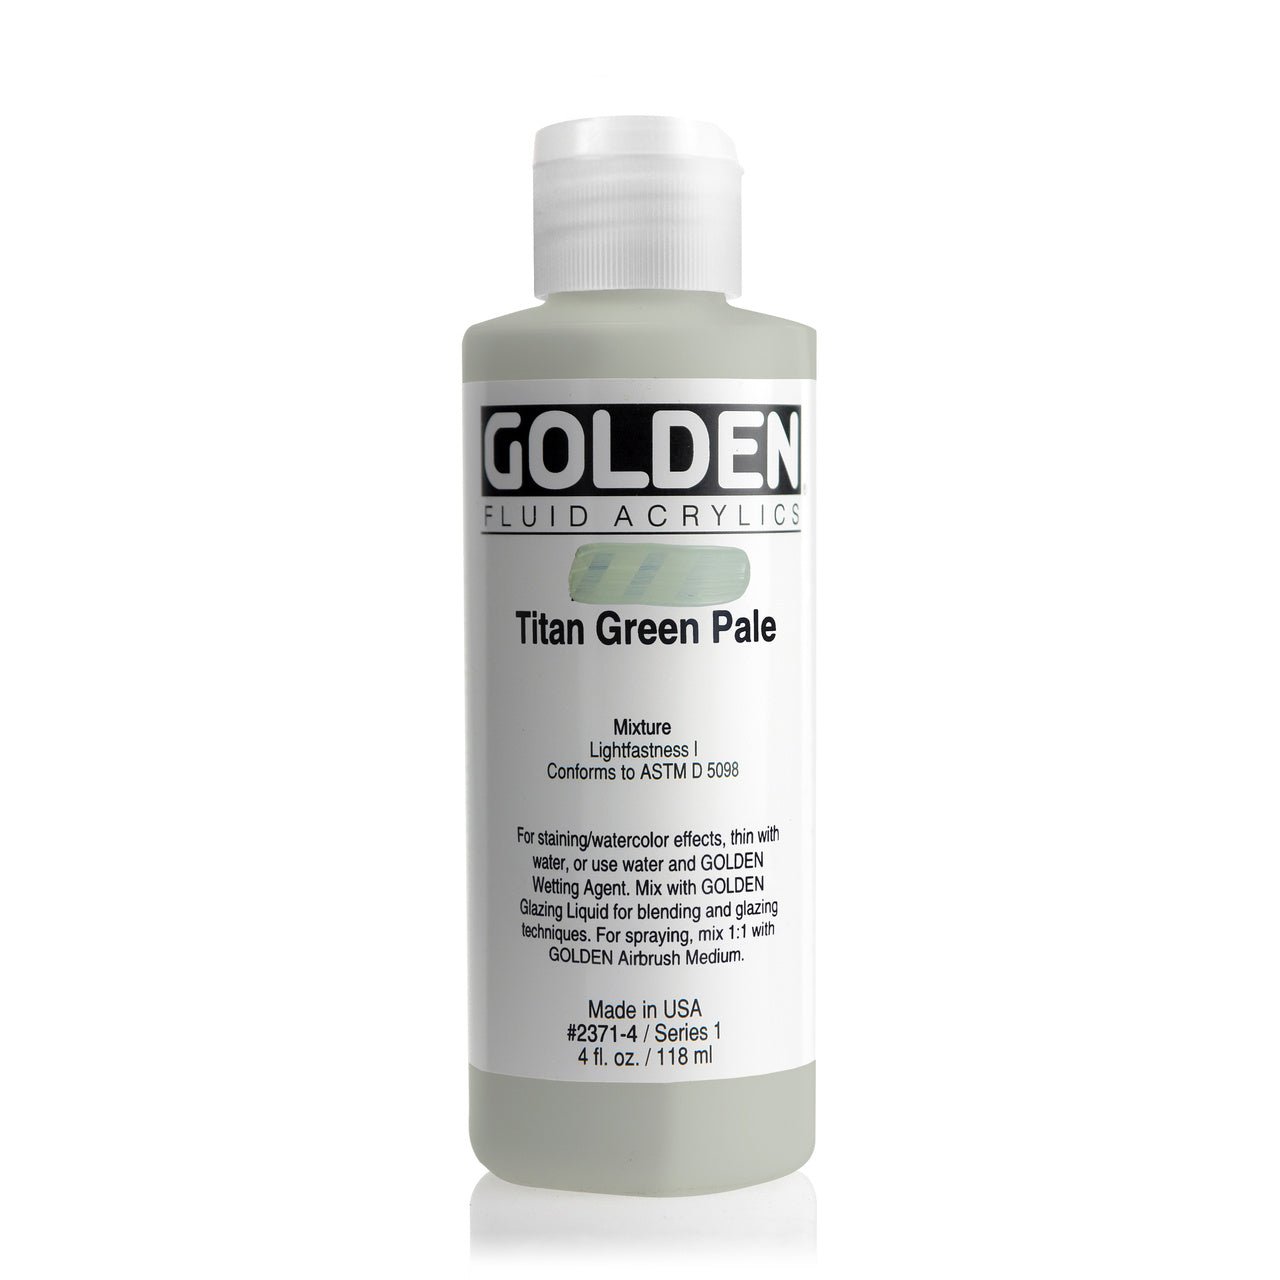 Golden Fluid Acrylic Titan Green Pale 4 oz - merriartist.com